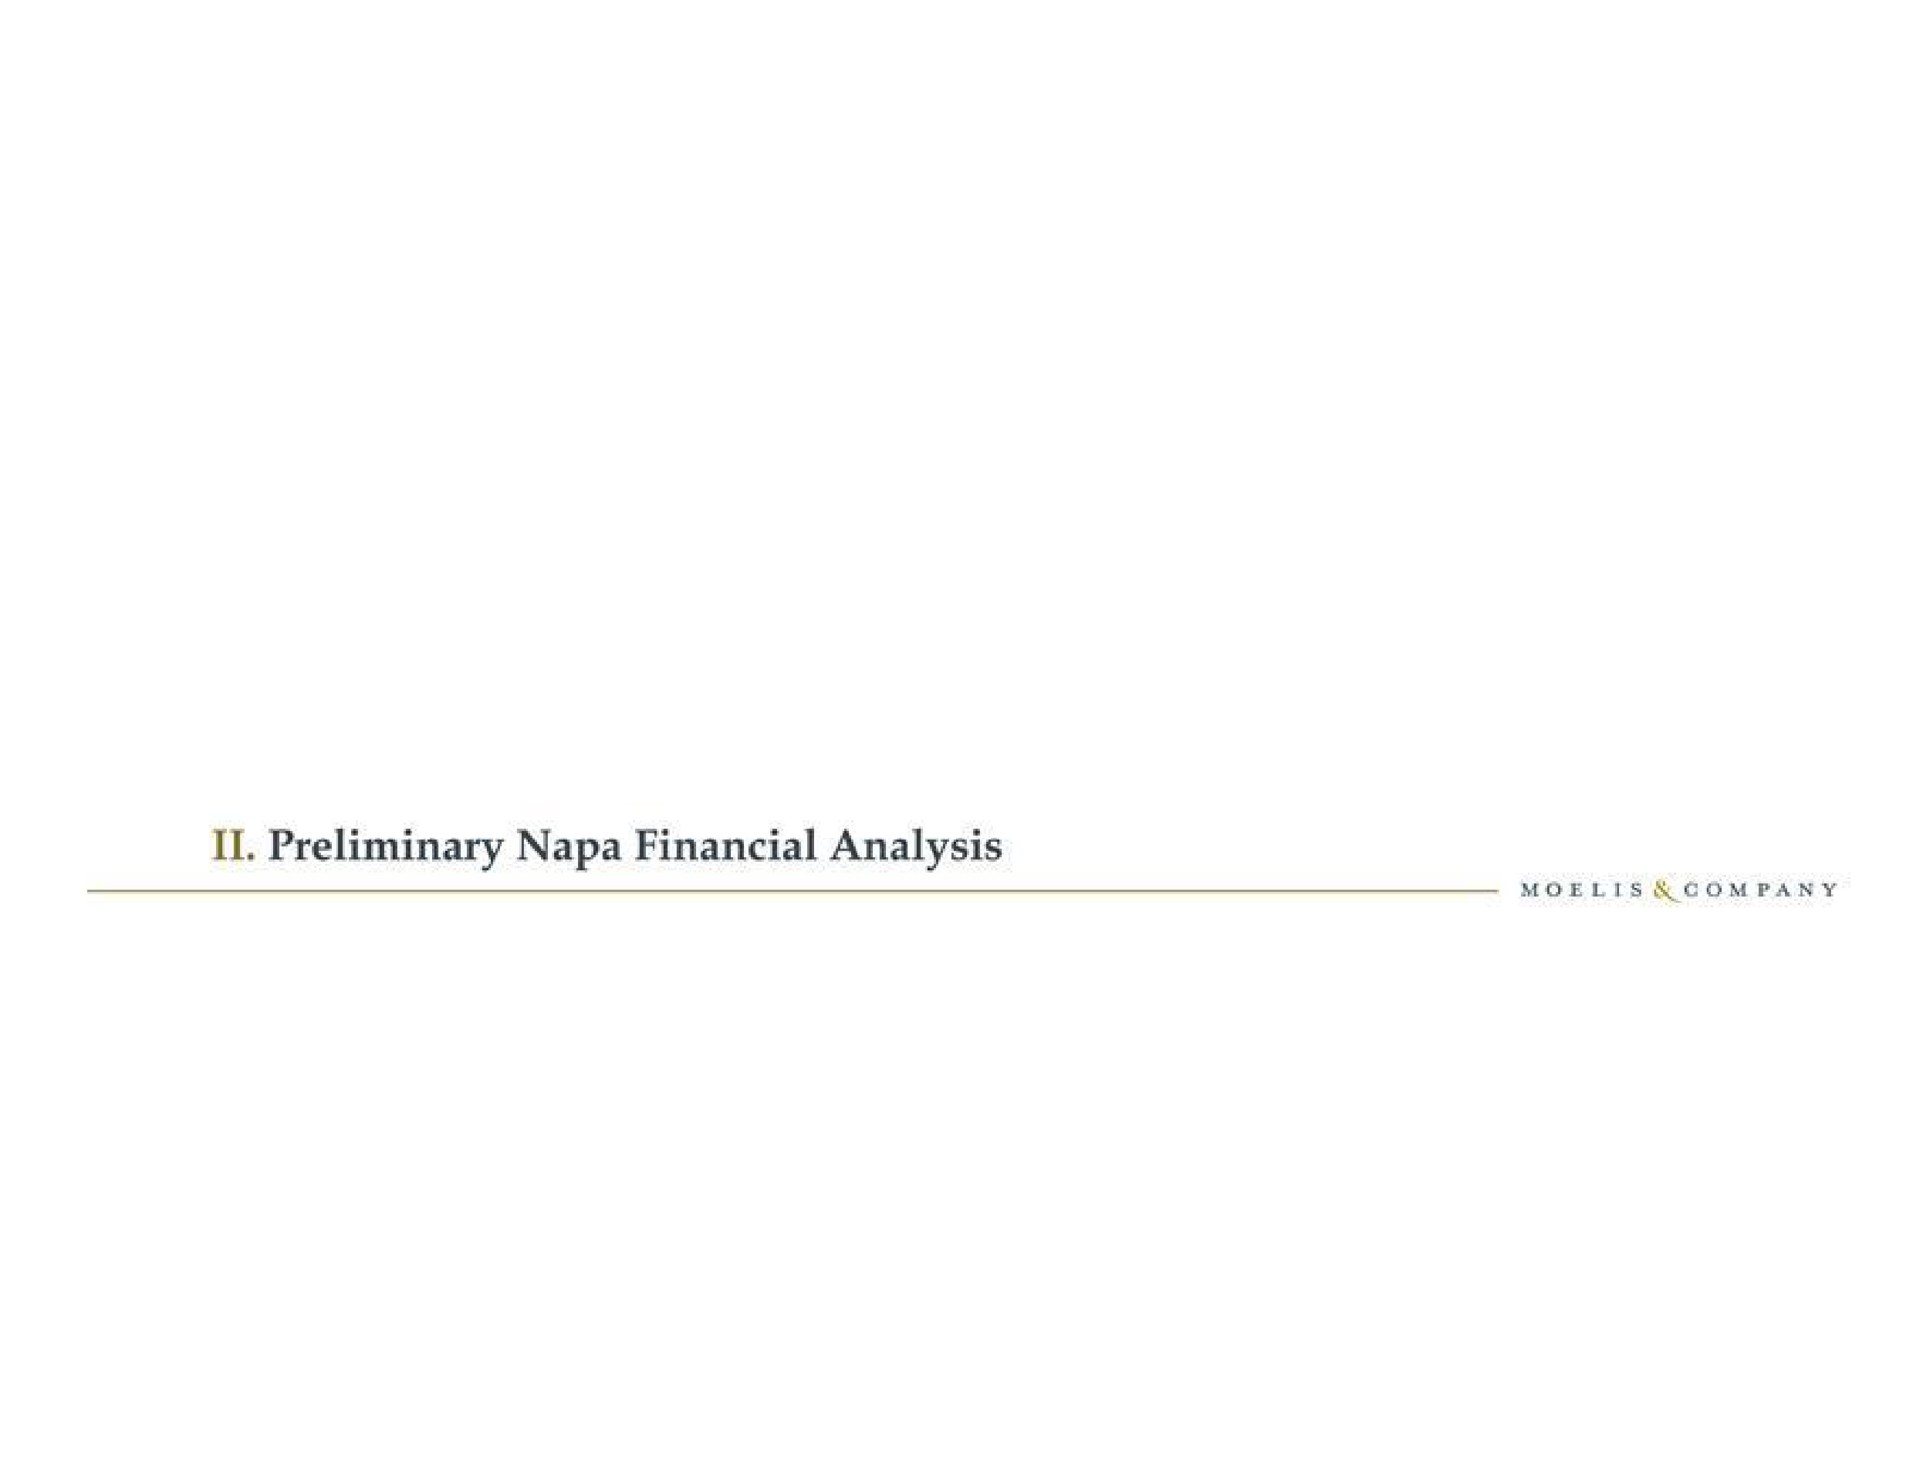 preliminary napa financial analysis | Moelis & Company